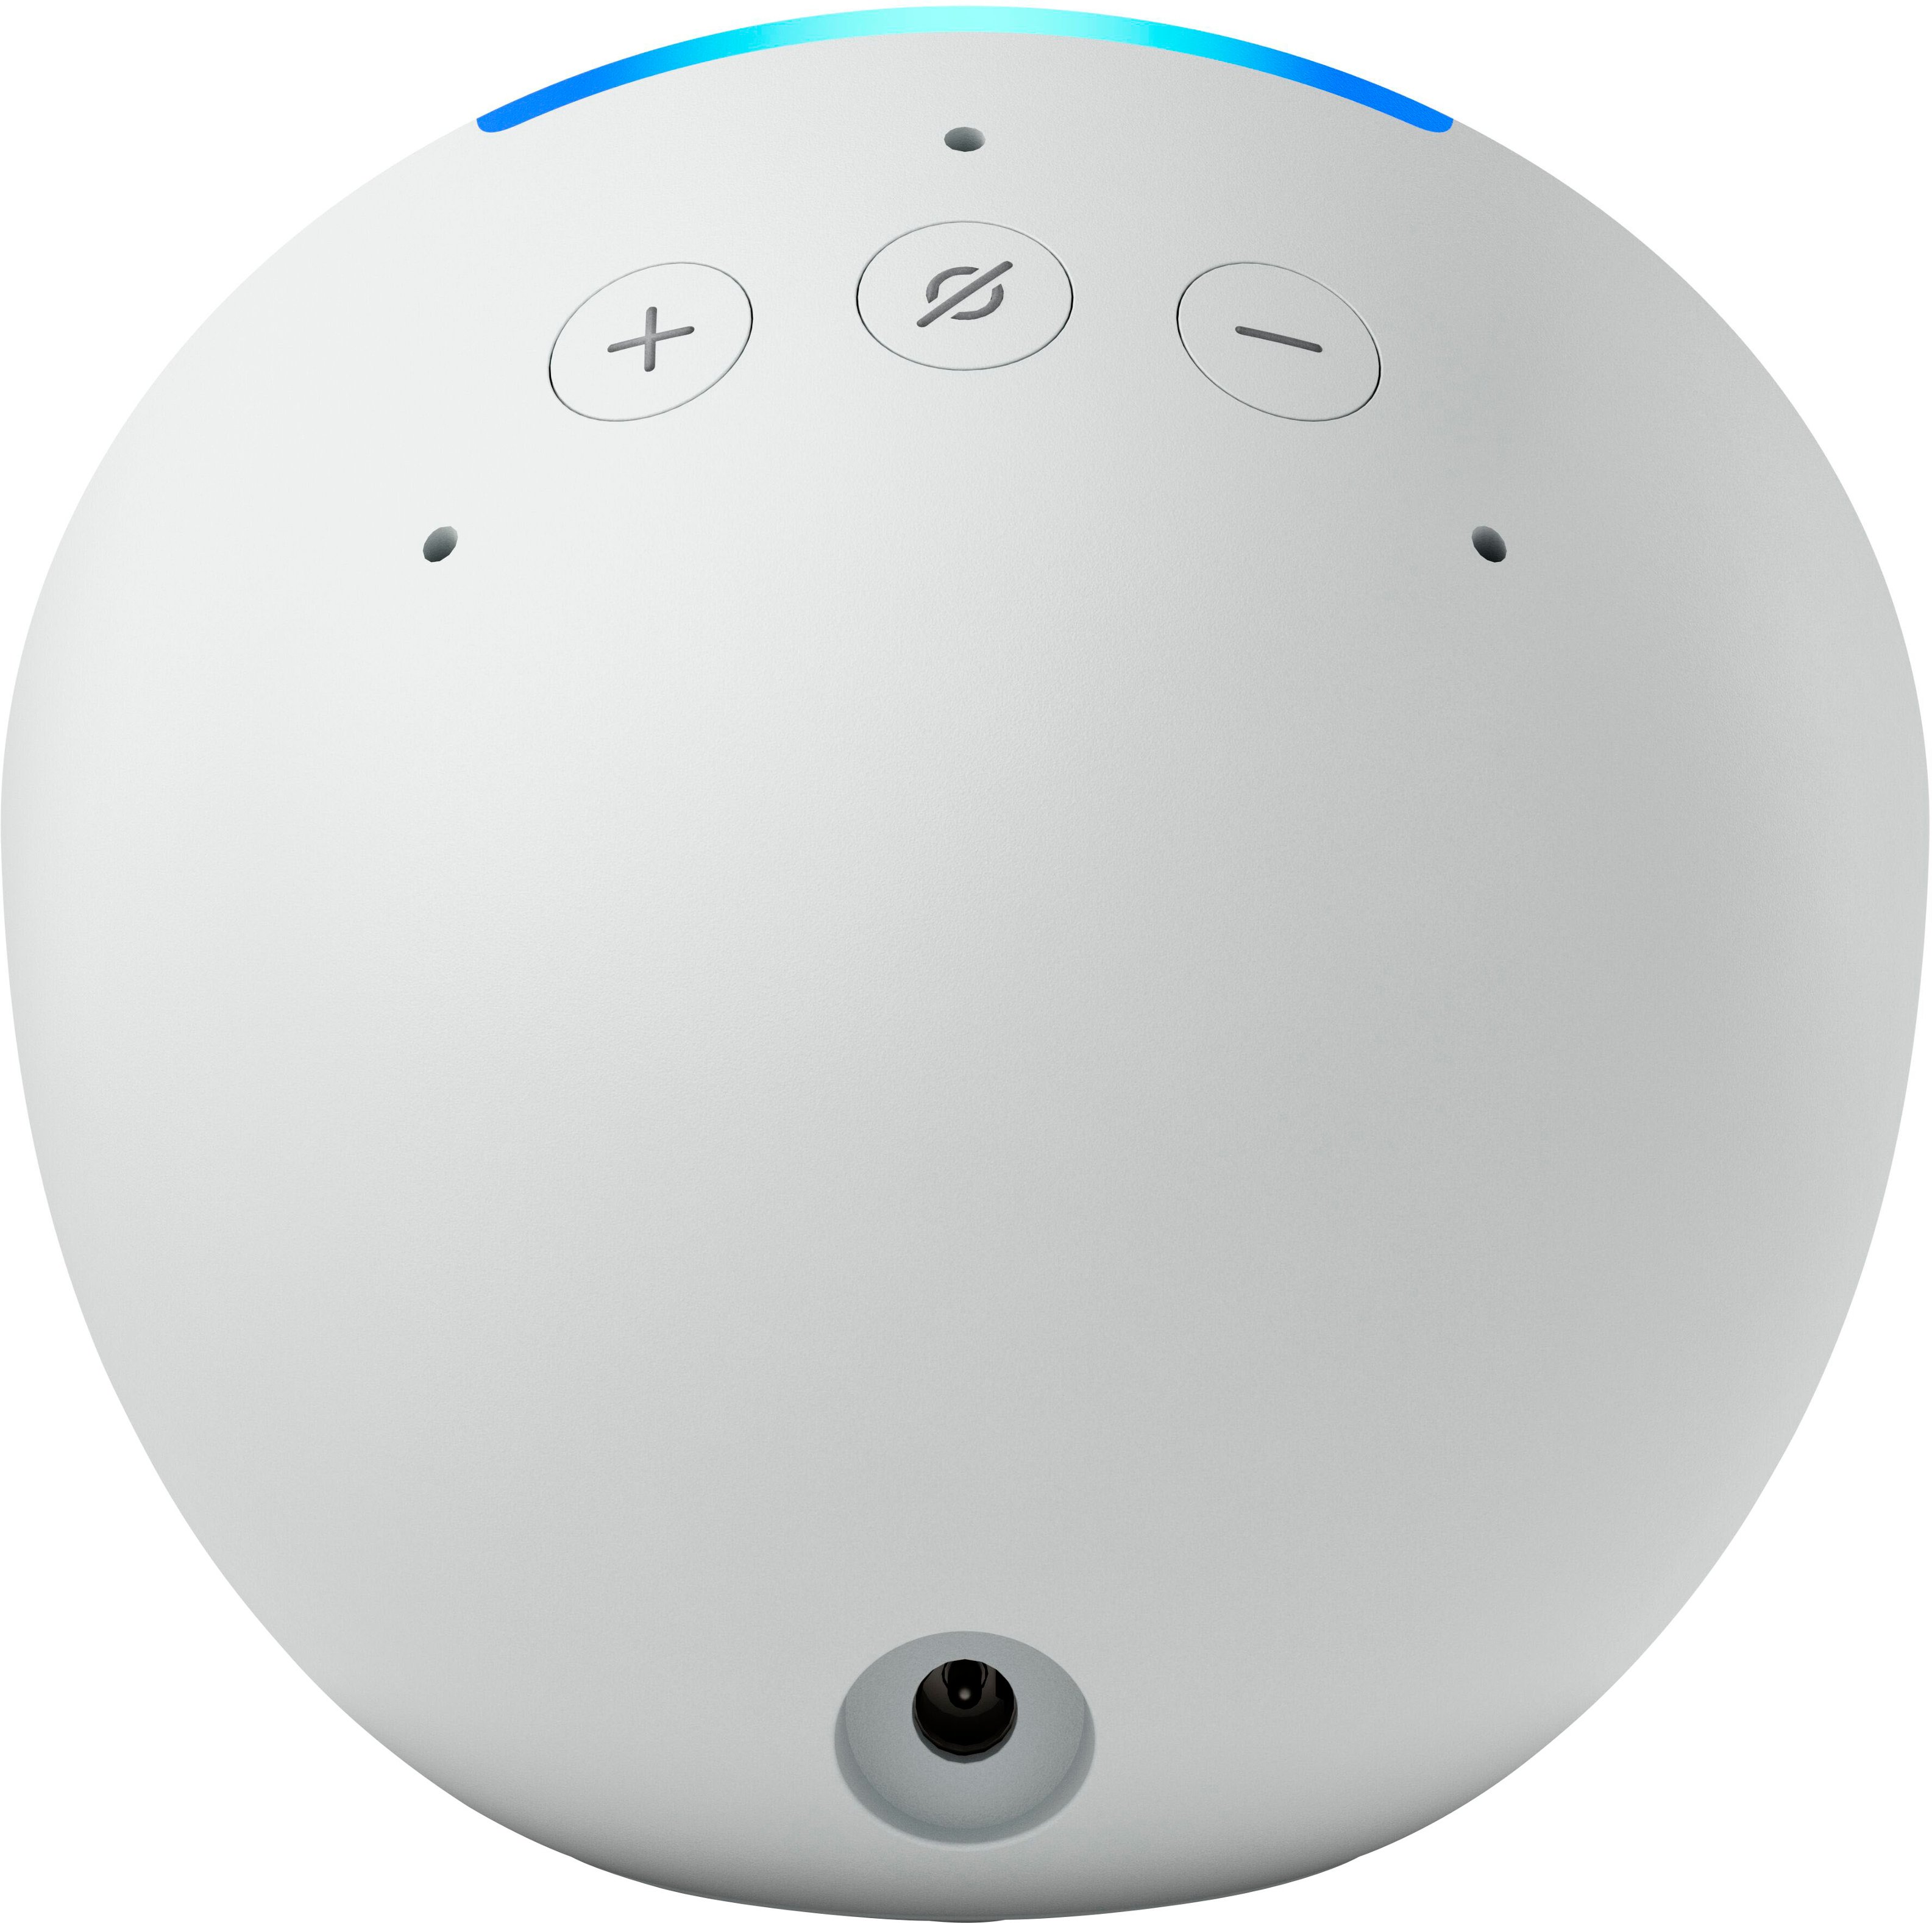  Echo Pop (1st Generation) Smart Speaker with Alexa - Glacier White